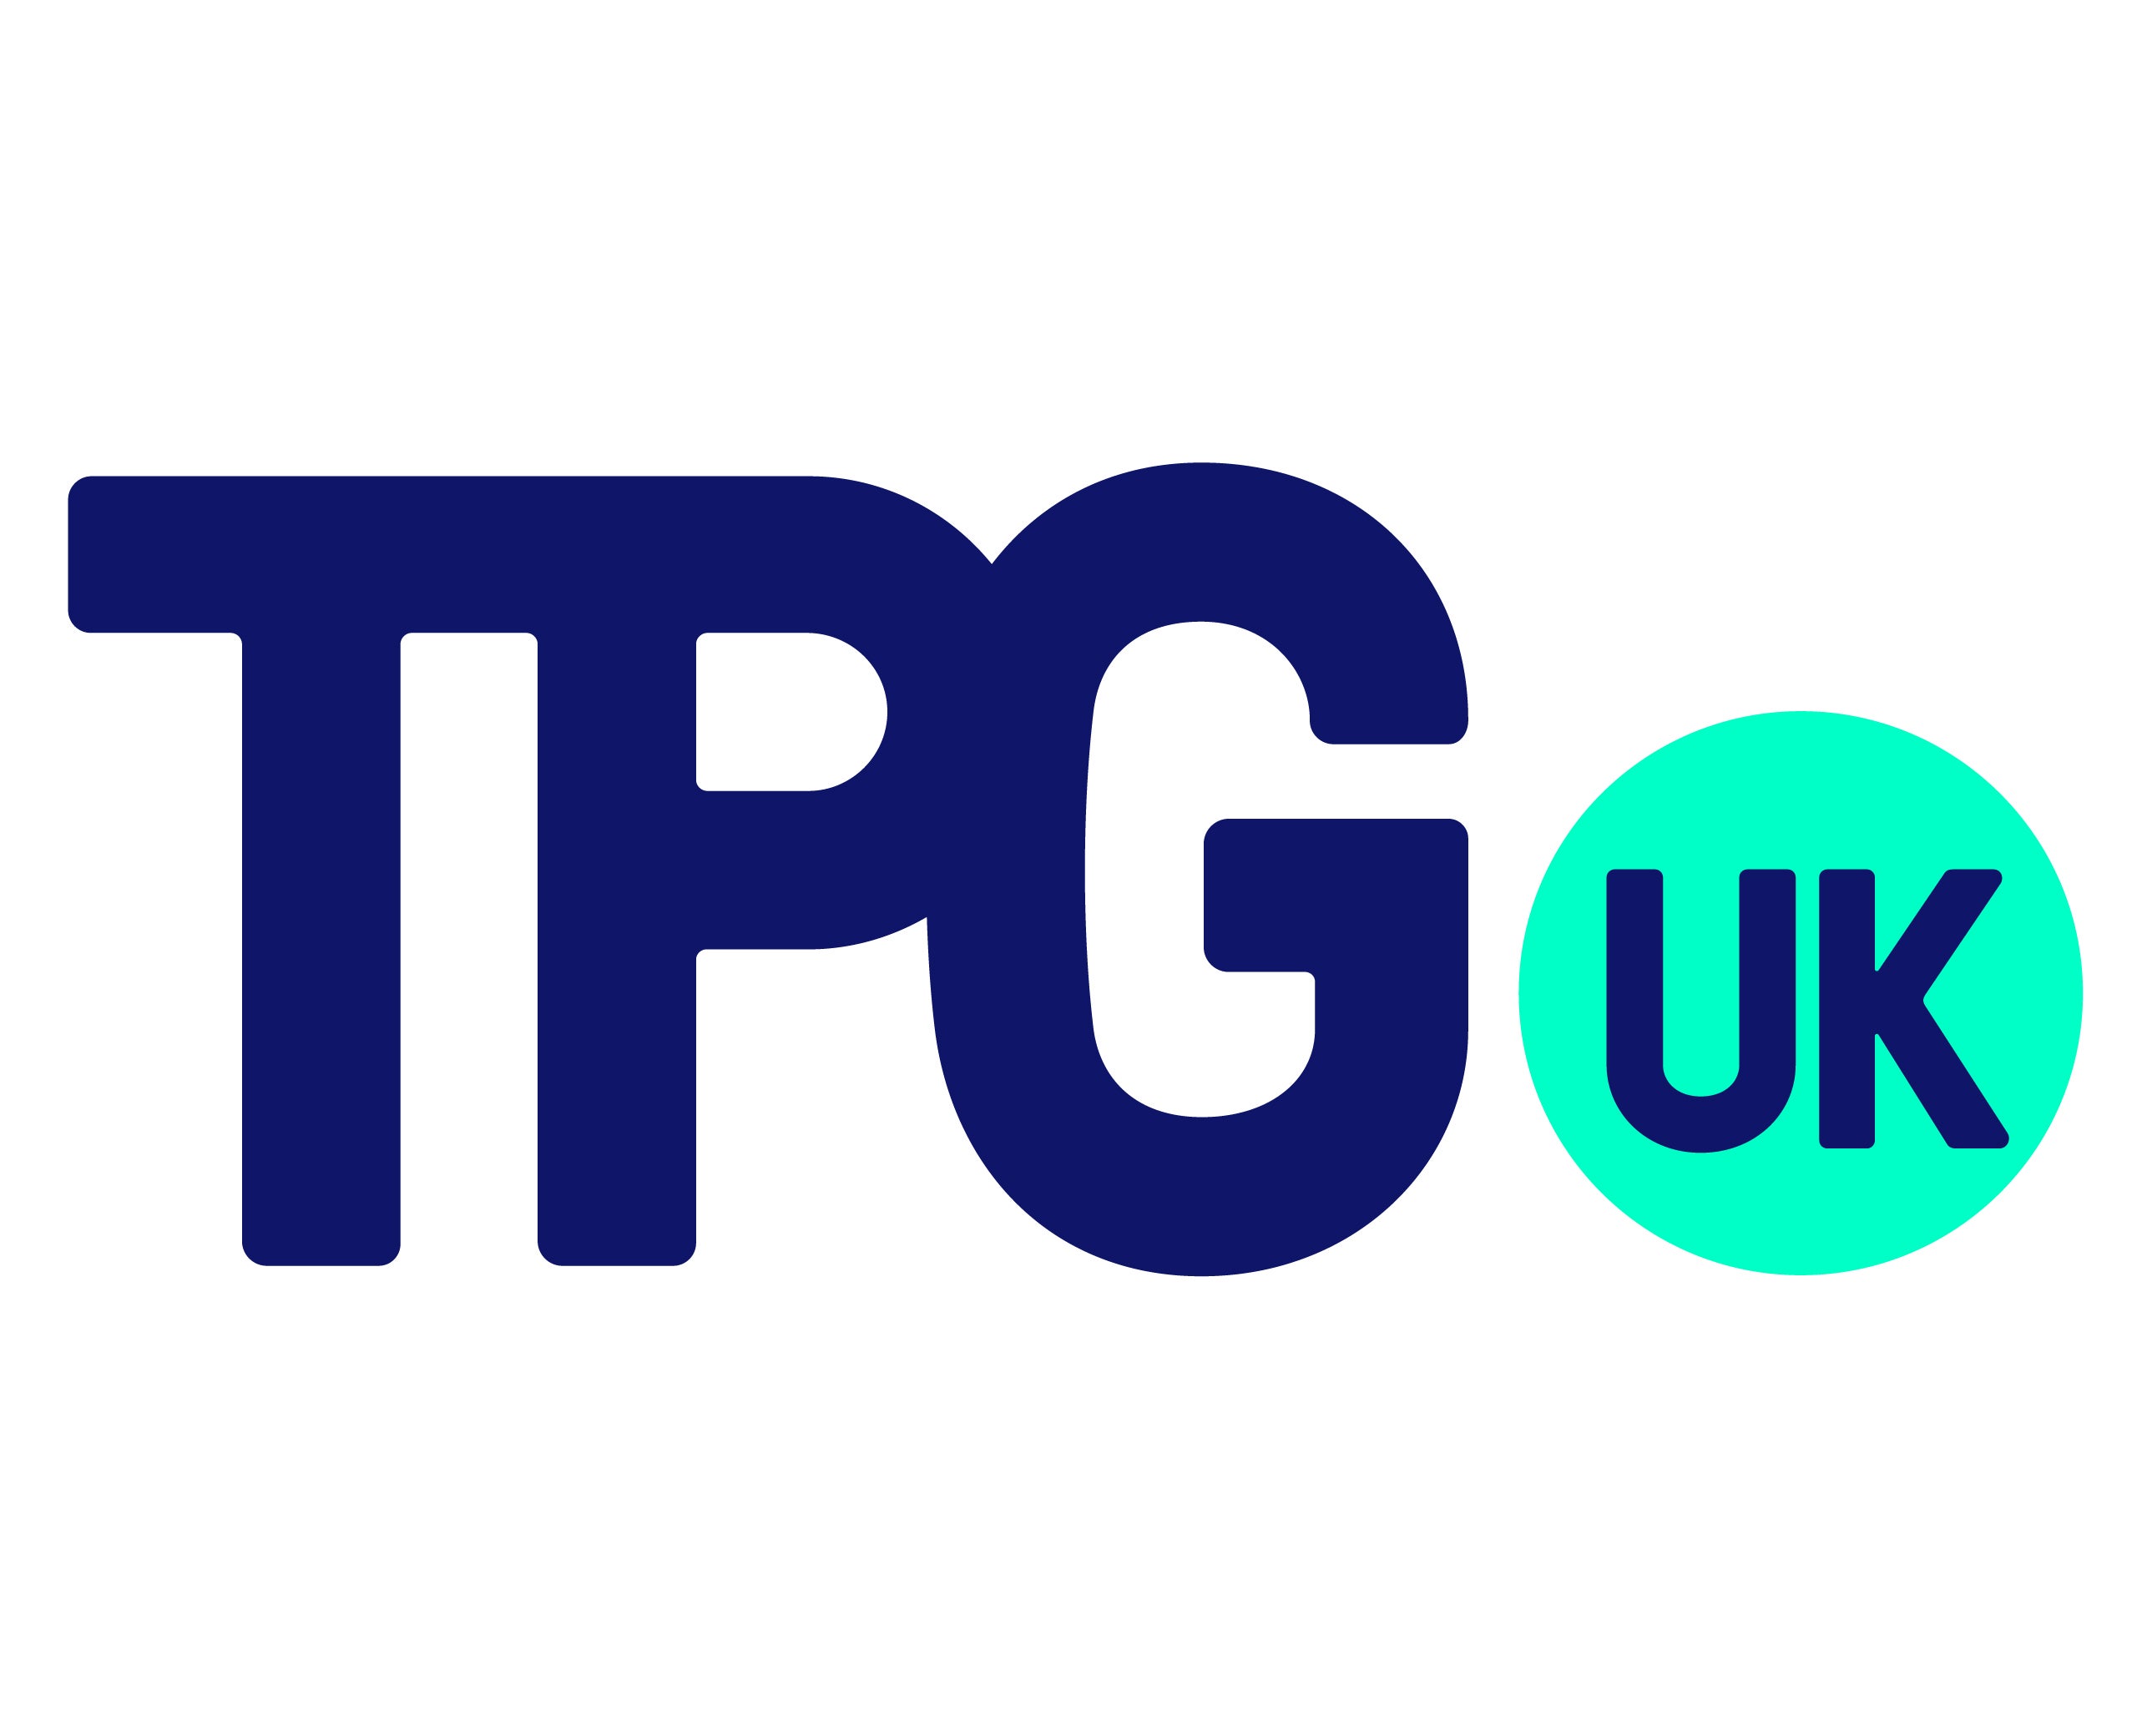 TPG-UK-Final Logos_Secondary Logo